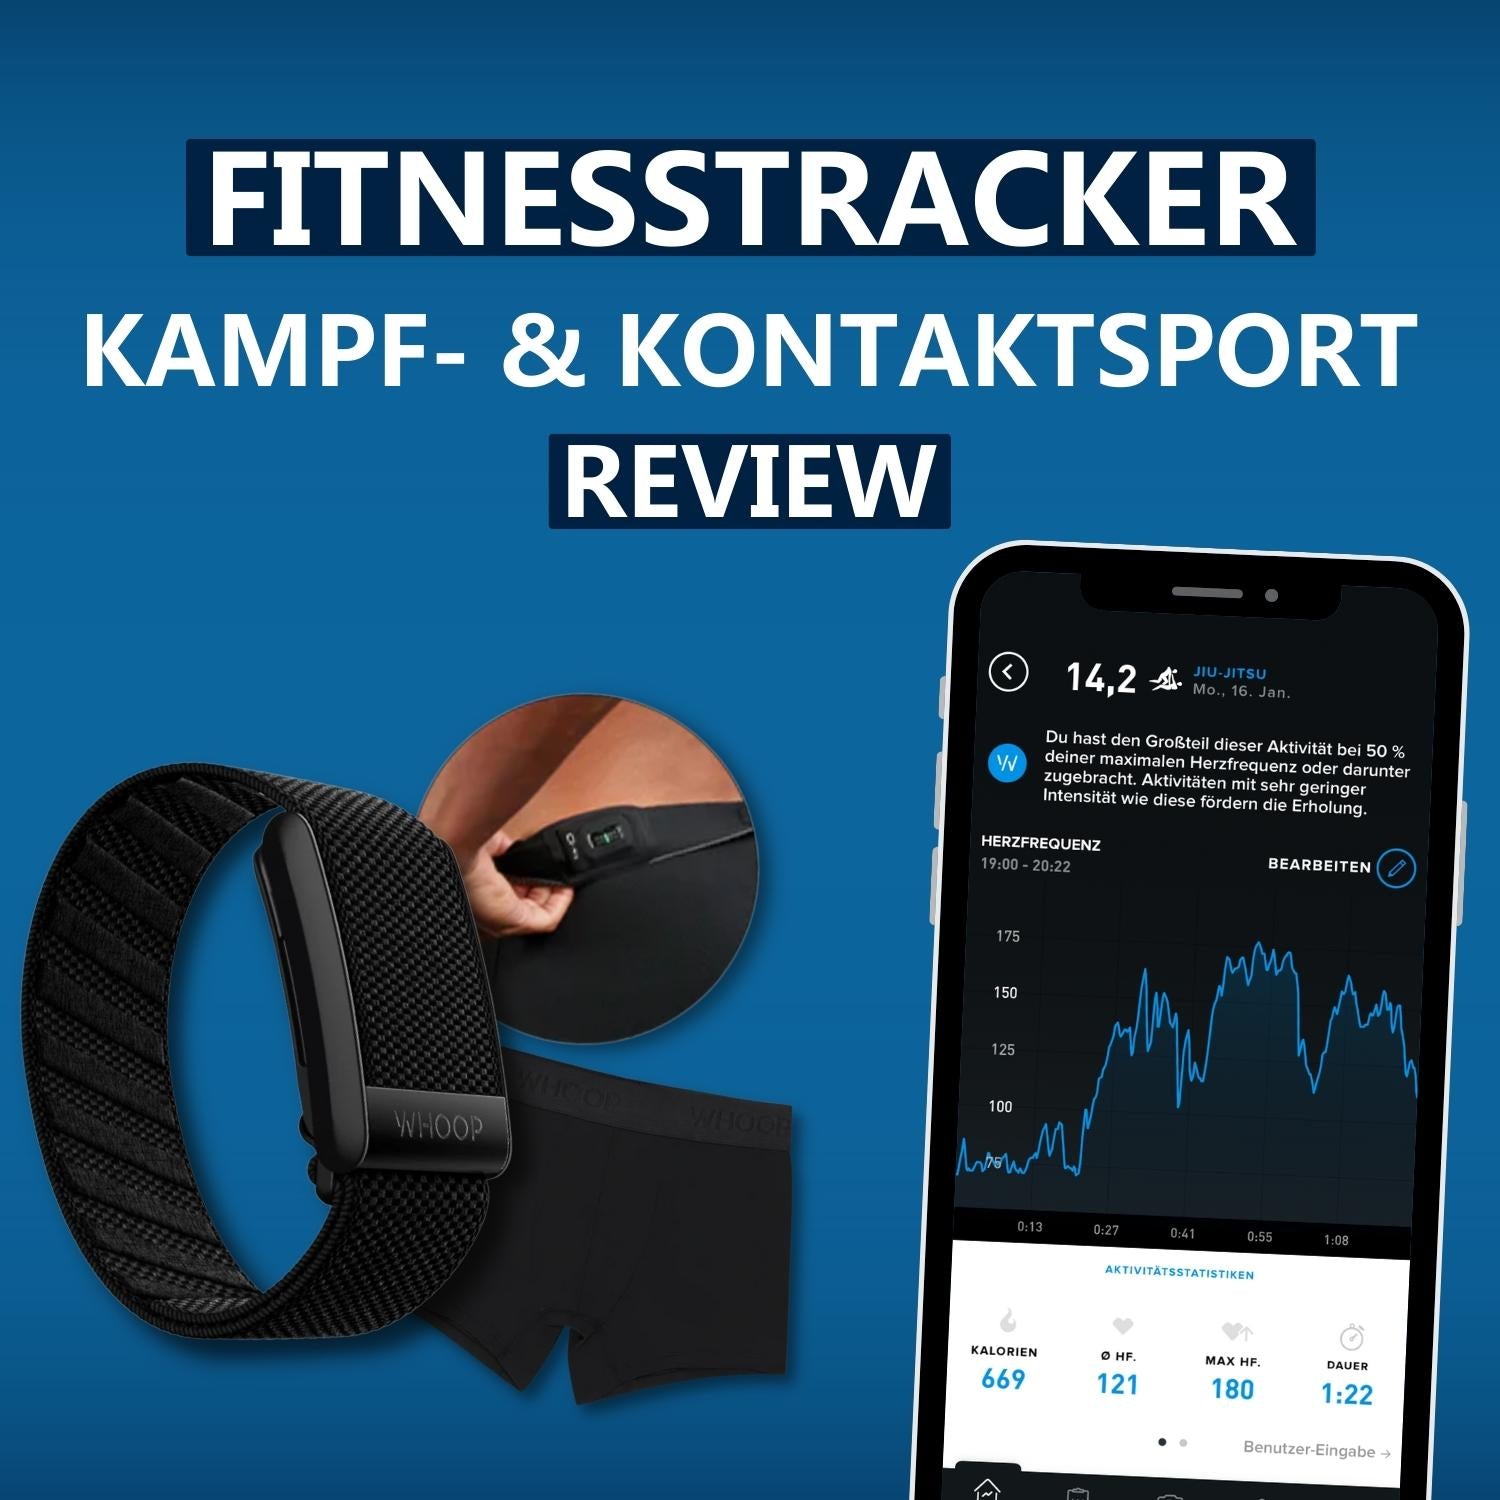 Fitnesstracker für Kontakt- & Kampfsport / Whoop 4.0 Review